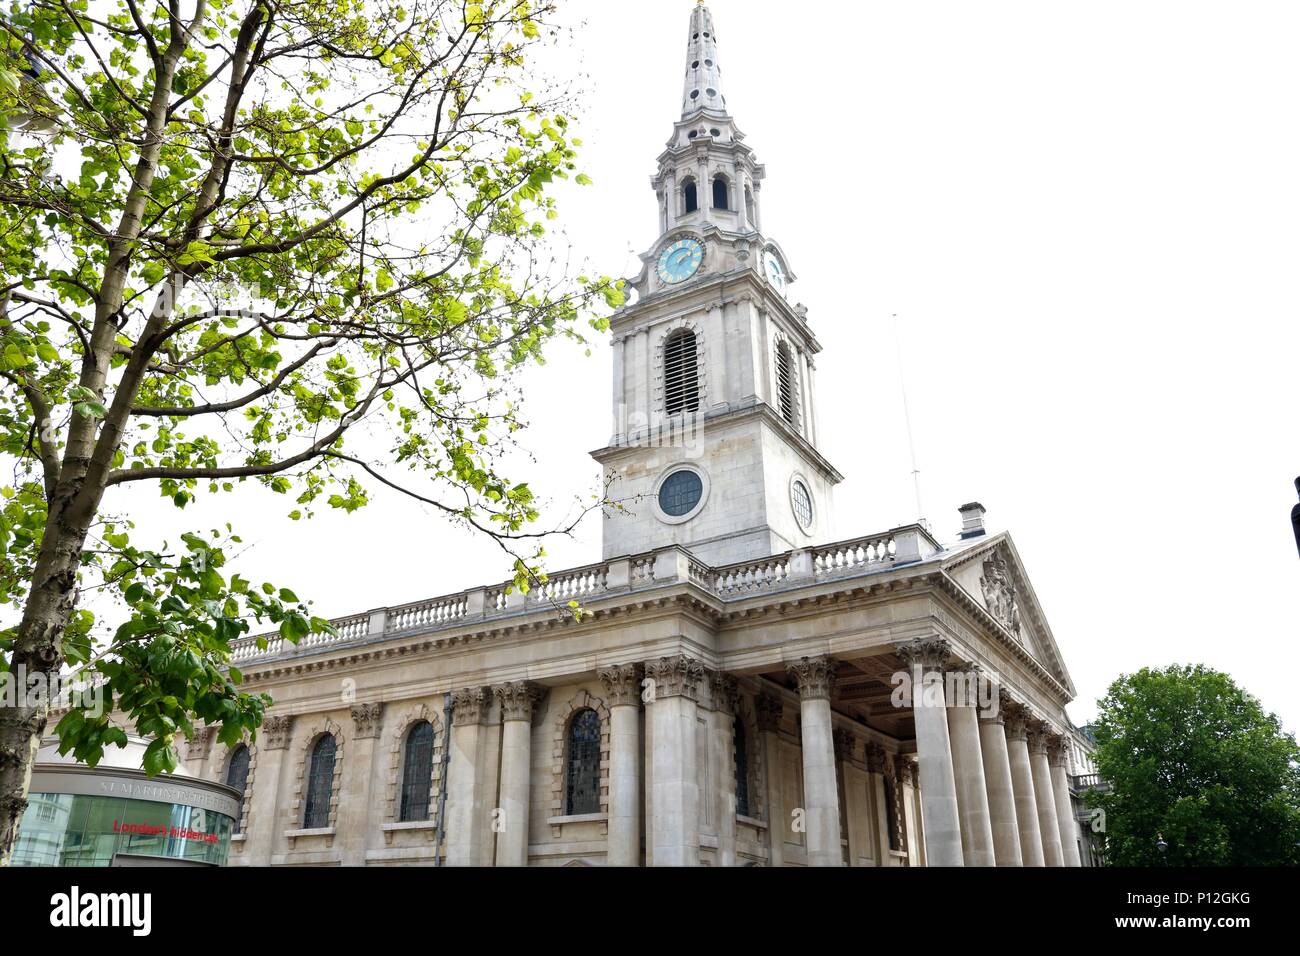 St. Martin-in-the-Fields, A James Gibb's church located in Trafalgar Square, London, UK Stock Photo